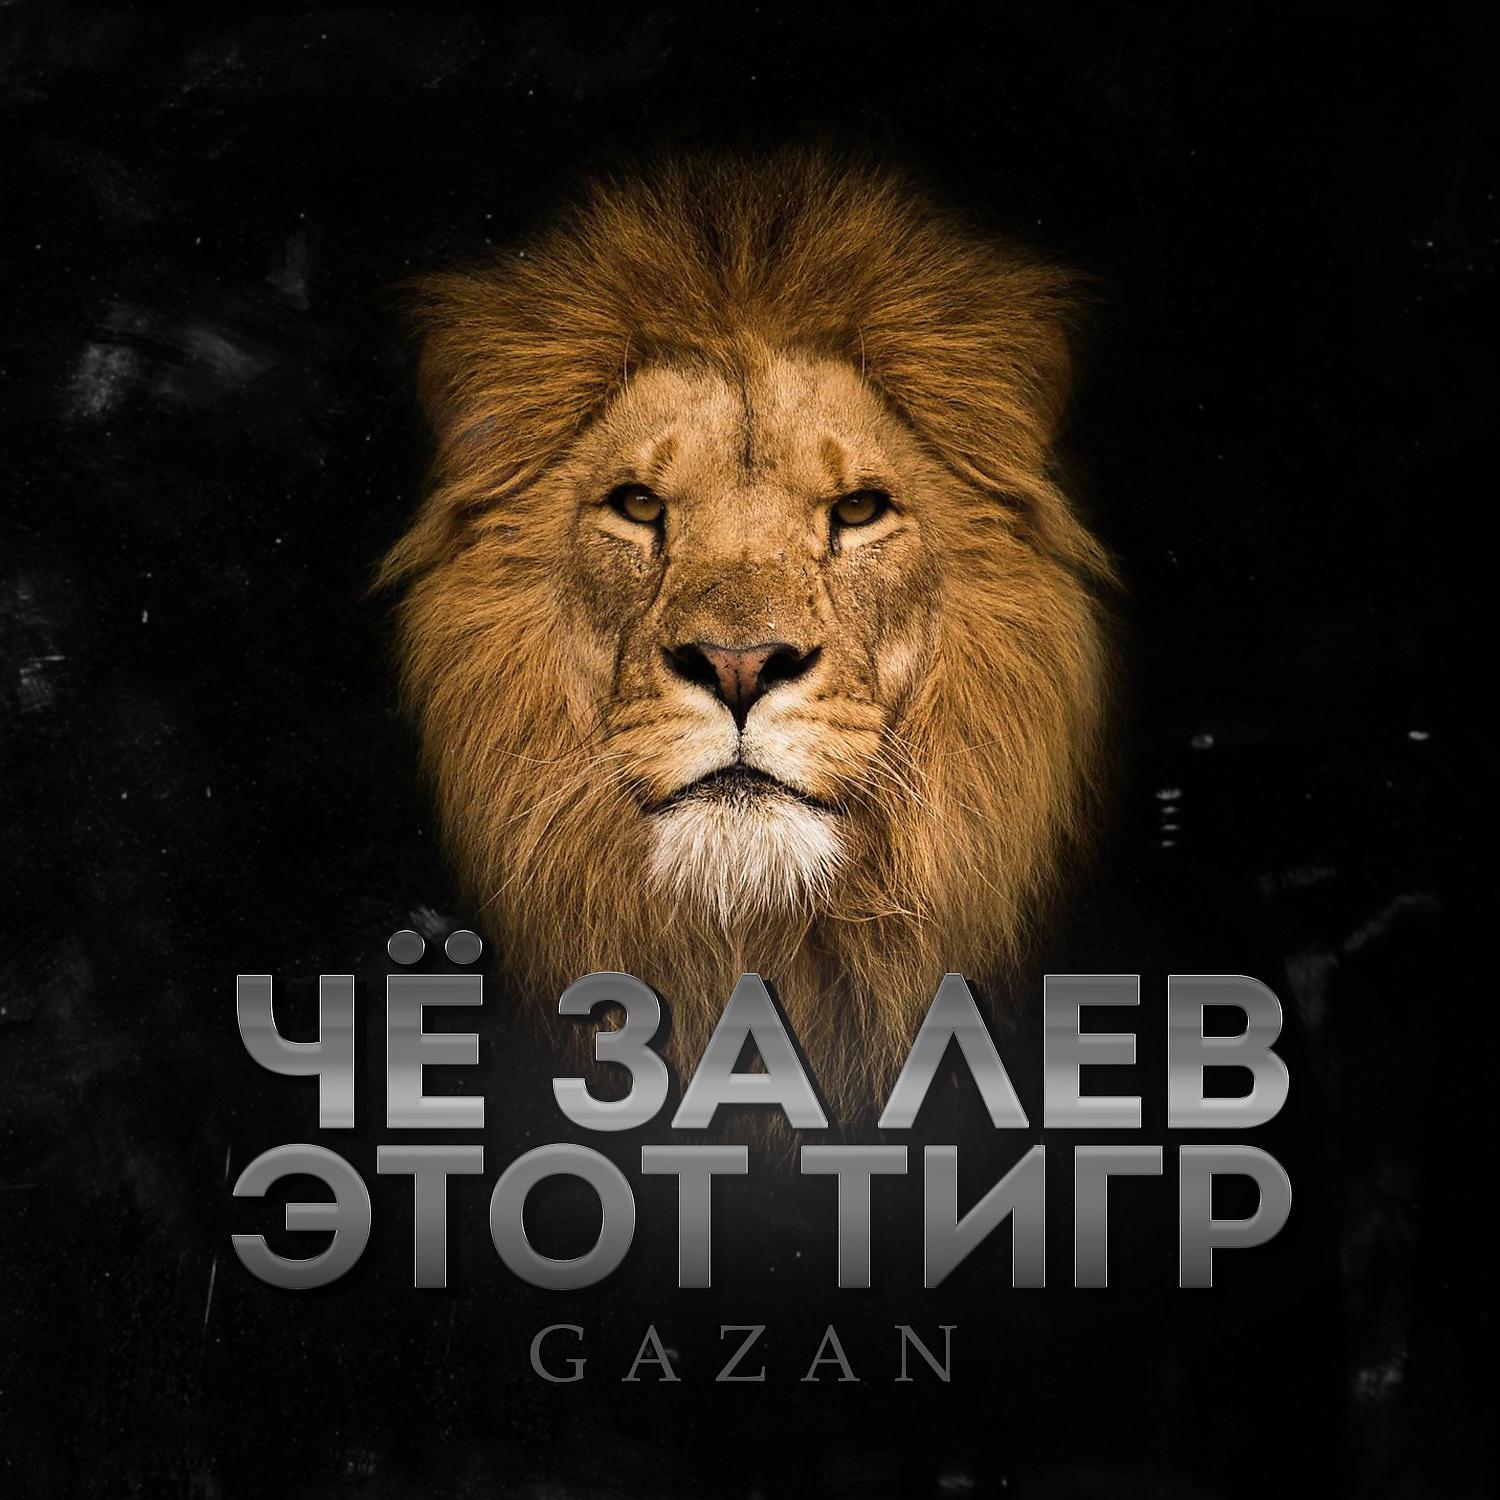 Что за лев этот тигр откуда фраза. Че за Лев этот тигр. Газан че за Лев этот тигр. Gazan тигр.